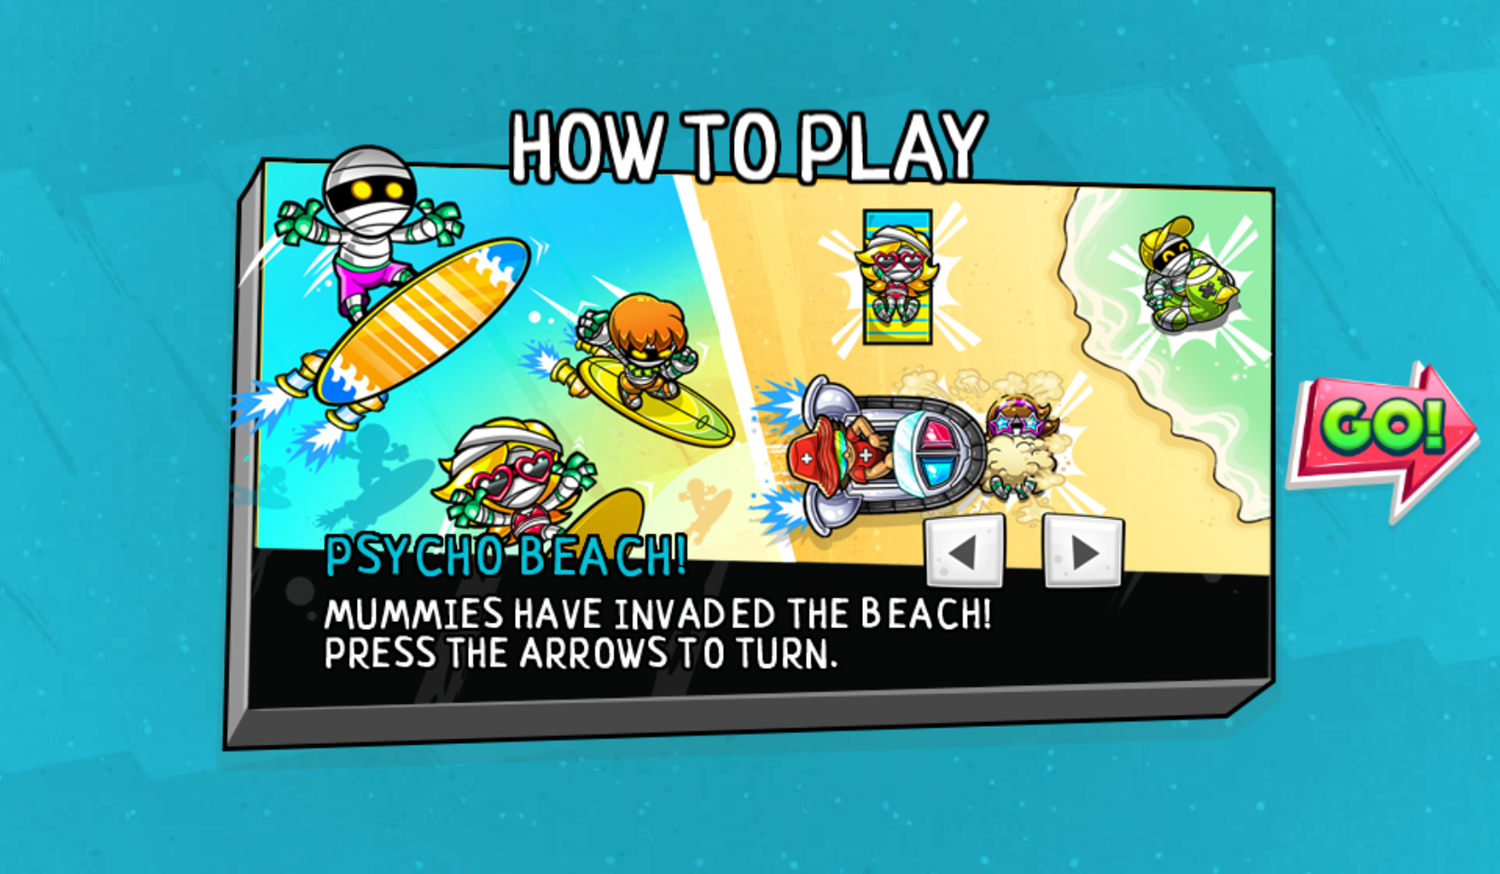 Psycho Beach Mummies Game How To Play Screenshot.